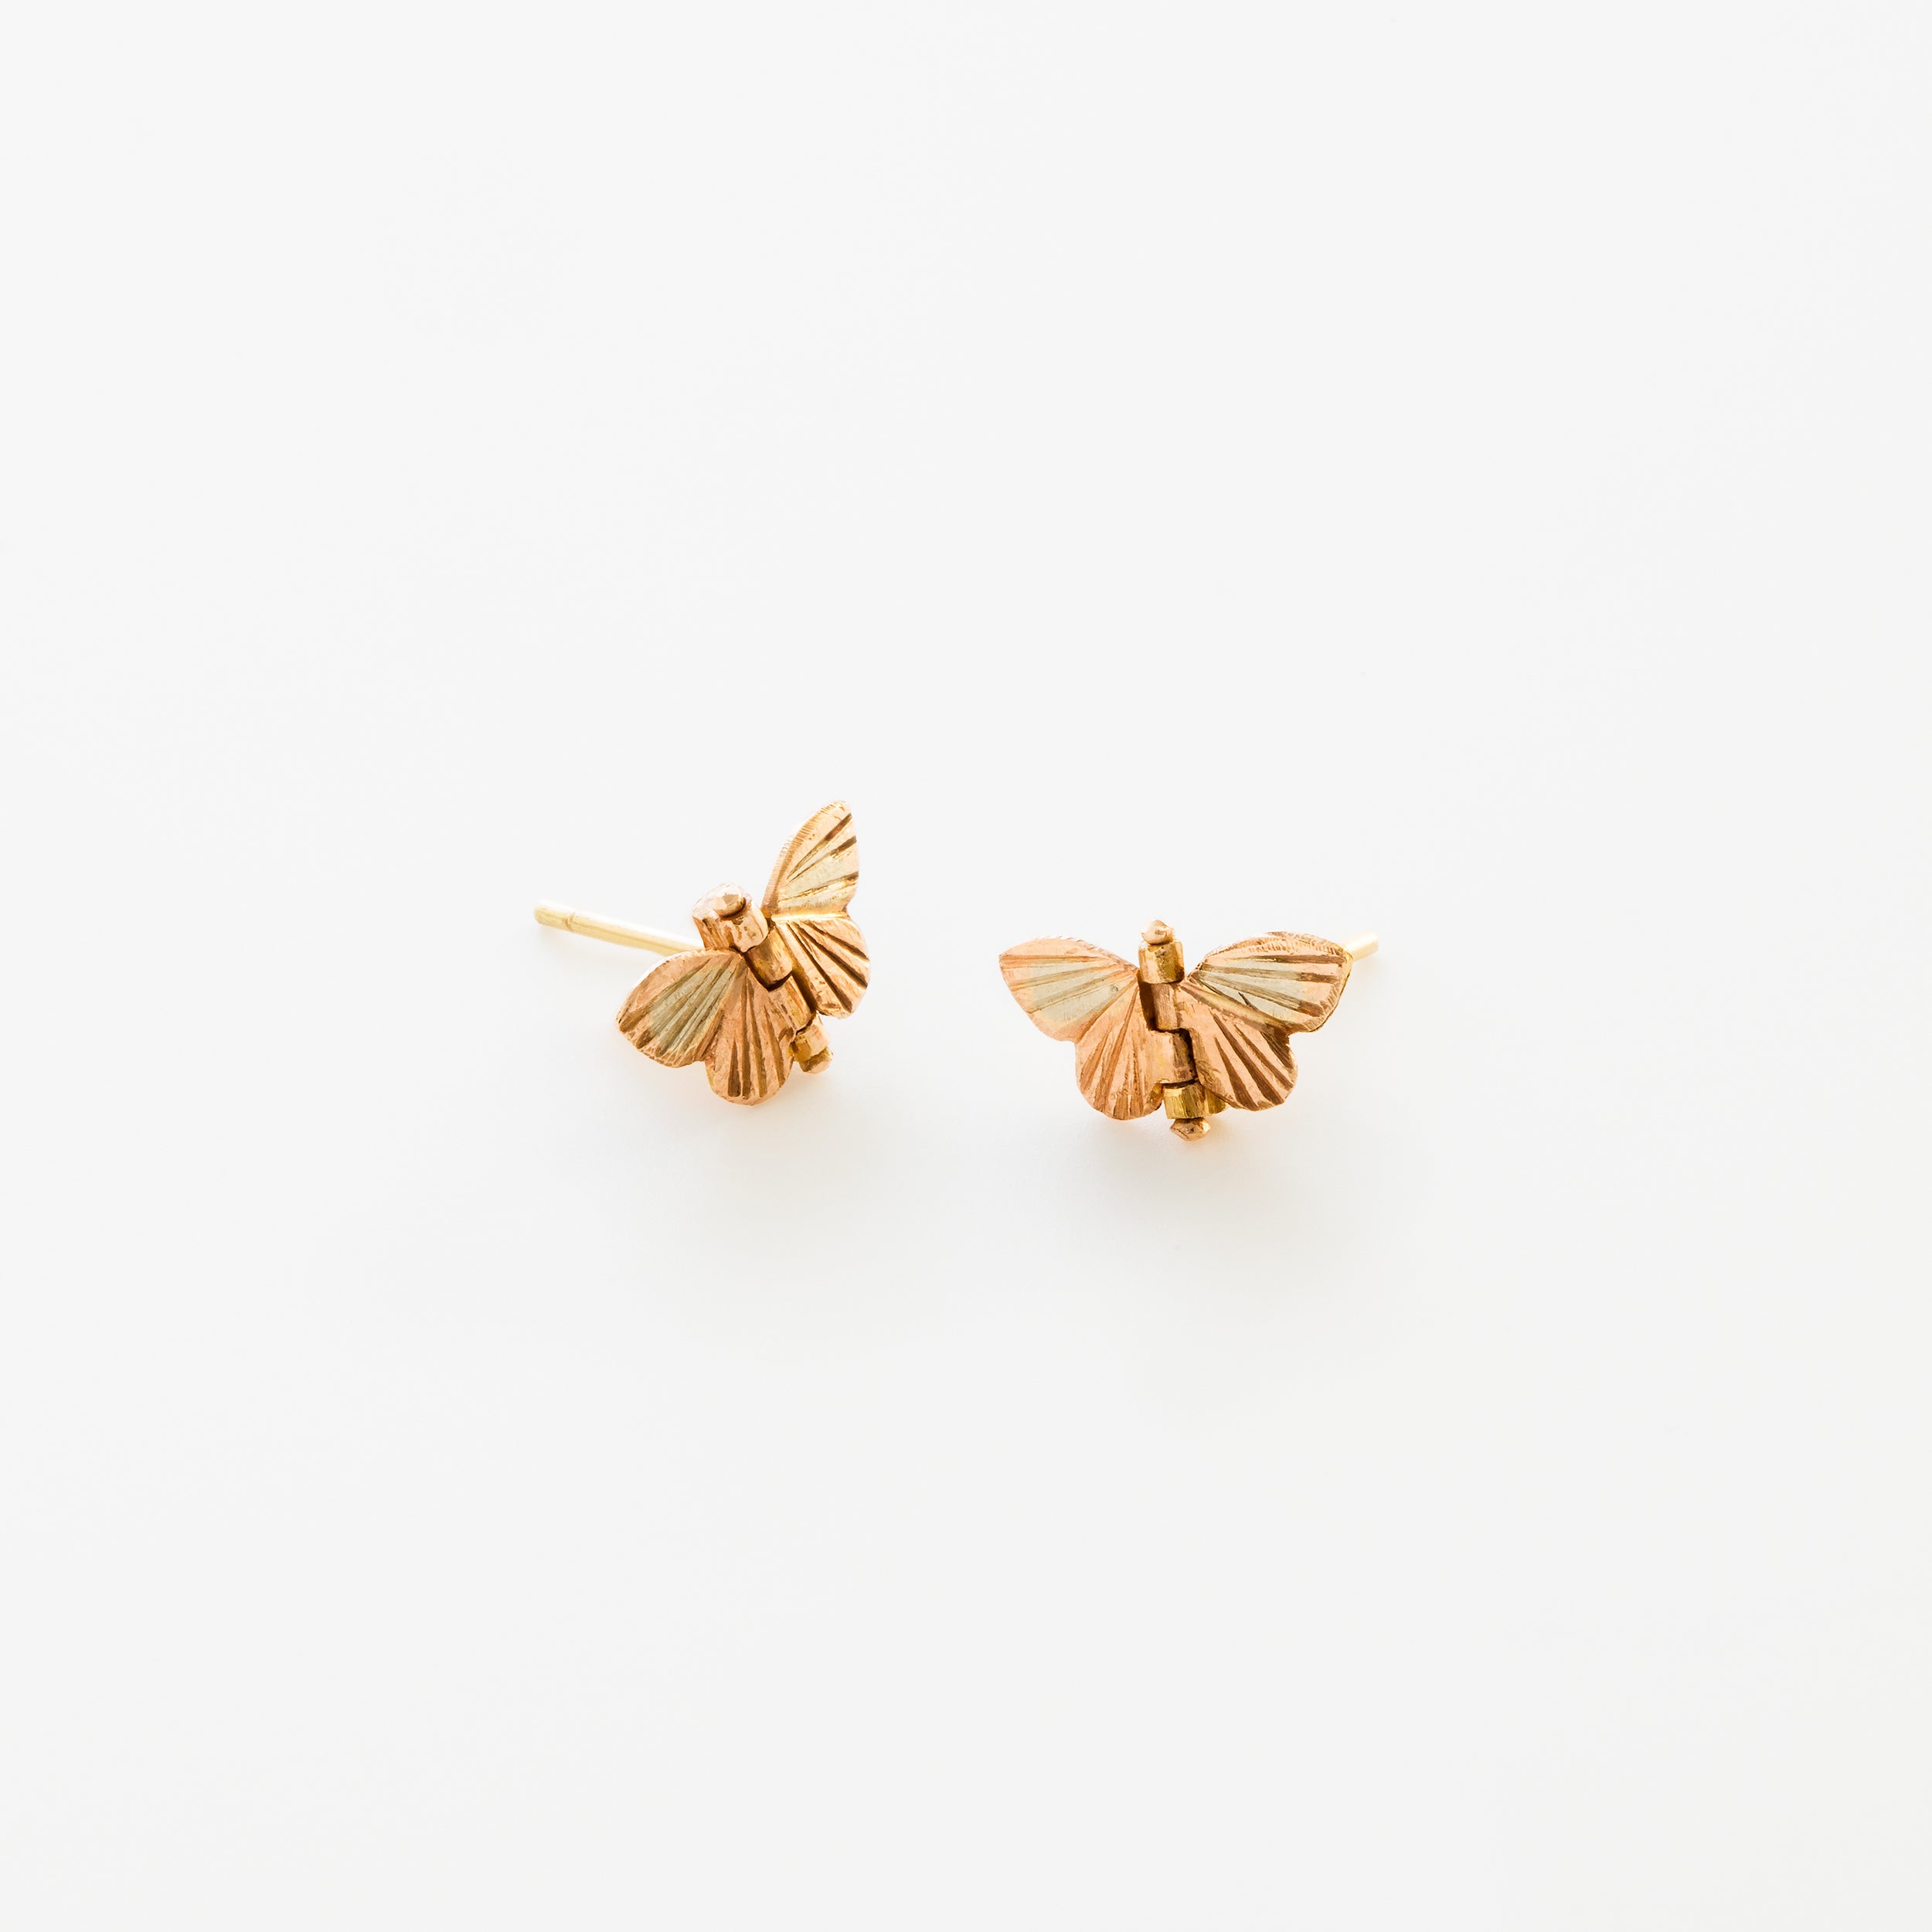 James Banks Design Small Baby Star Earrings | goop